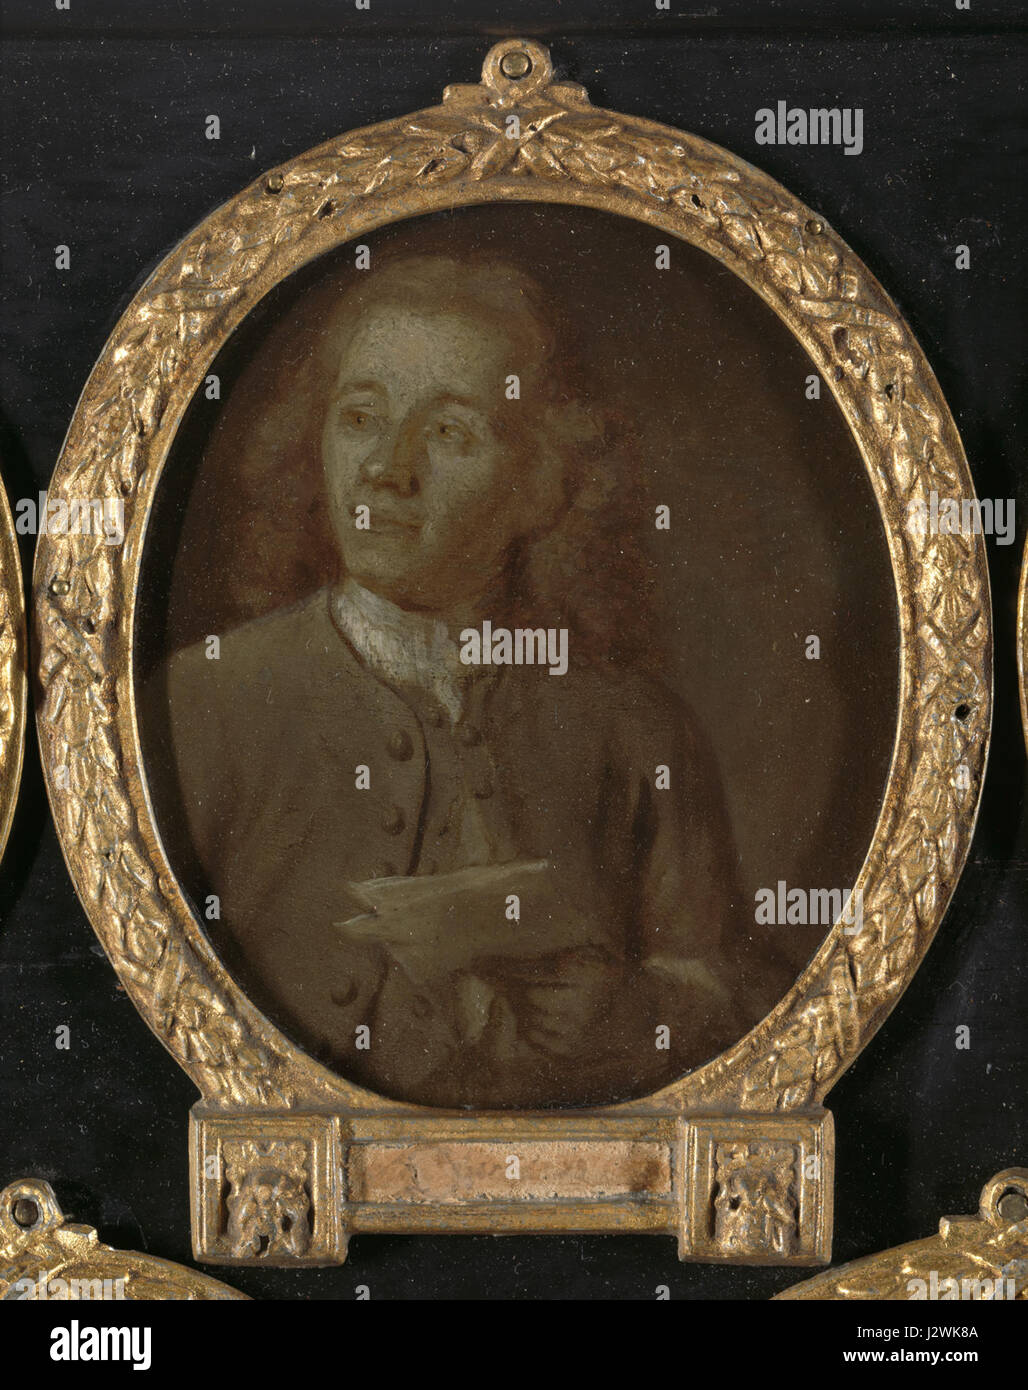 Abraham de Haen (1707-48). Tekenaar, etser en dichter te Amsterdam Rijksmuseum SK-A-4620 Stock Photo